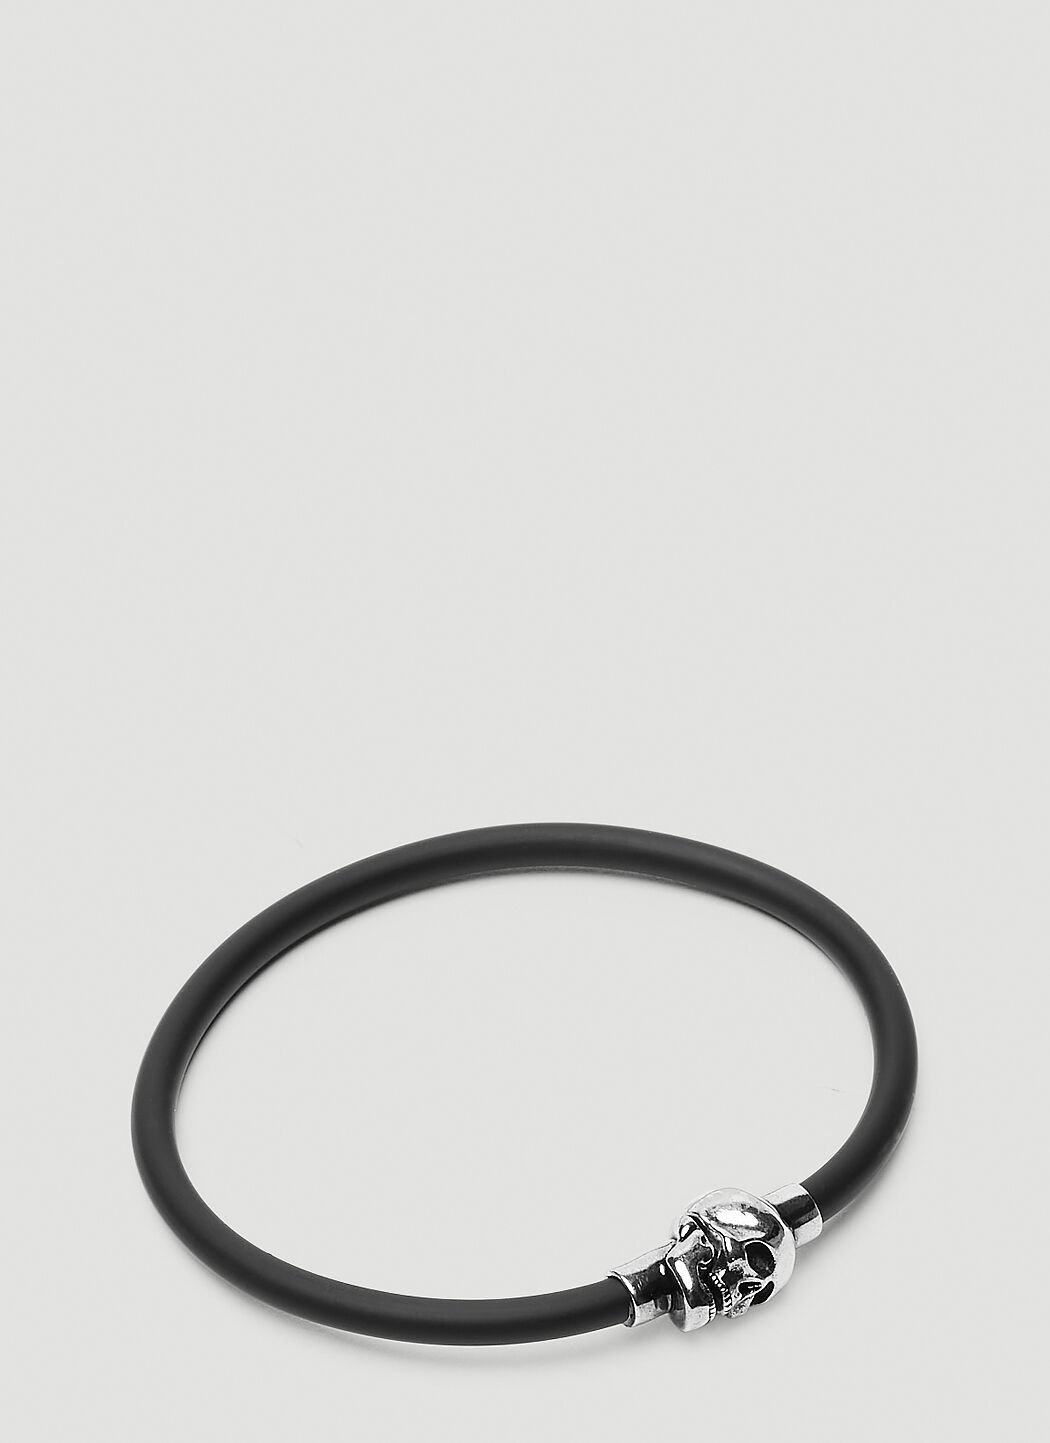 Alexander McQueen Skull Motif Cord Bracelet Black amq0152002